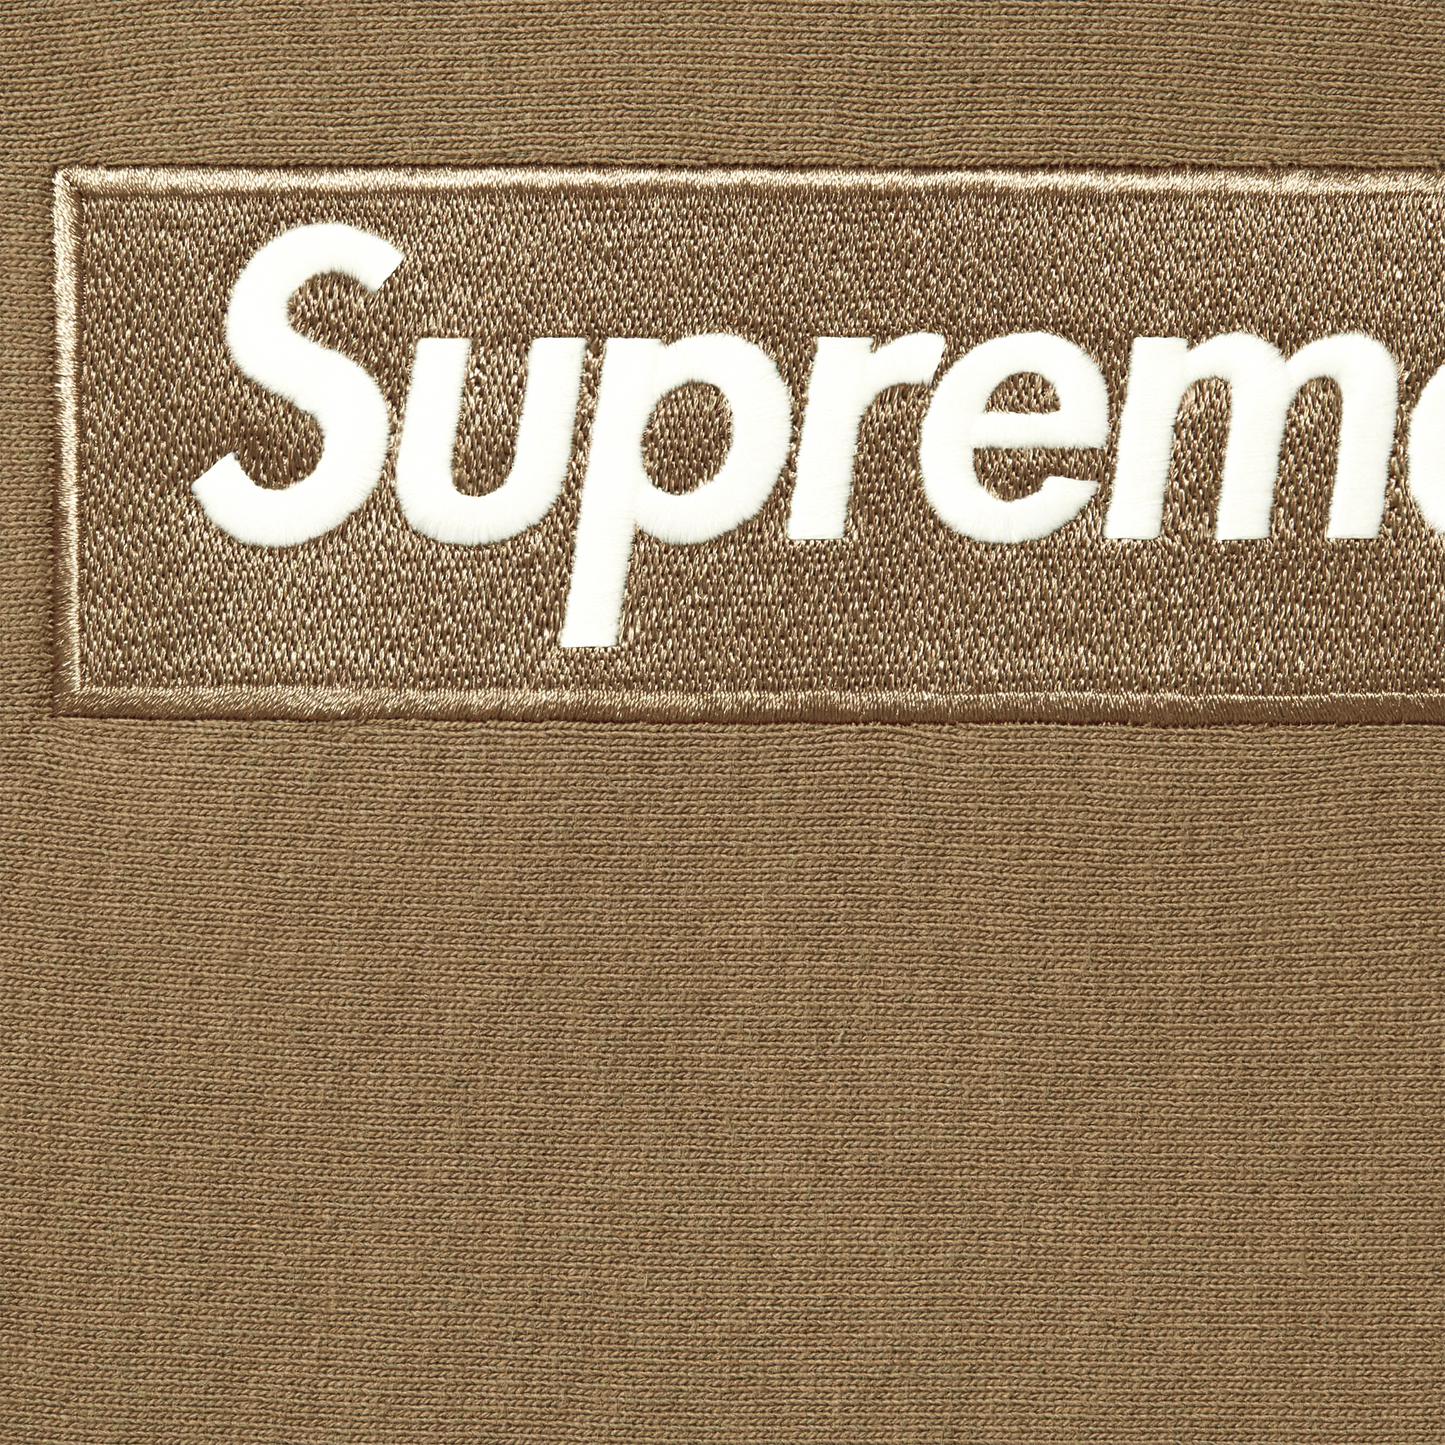 Supreme Box Logo Hooded Sweatshirt Dark Sand